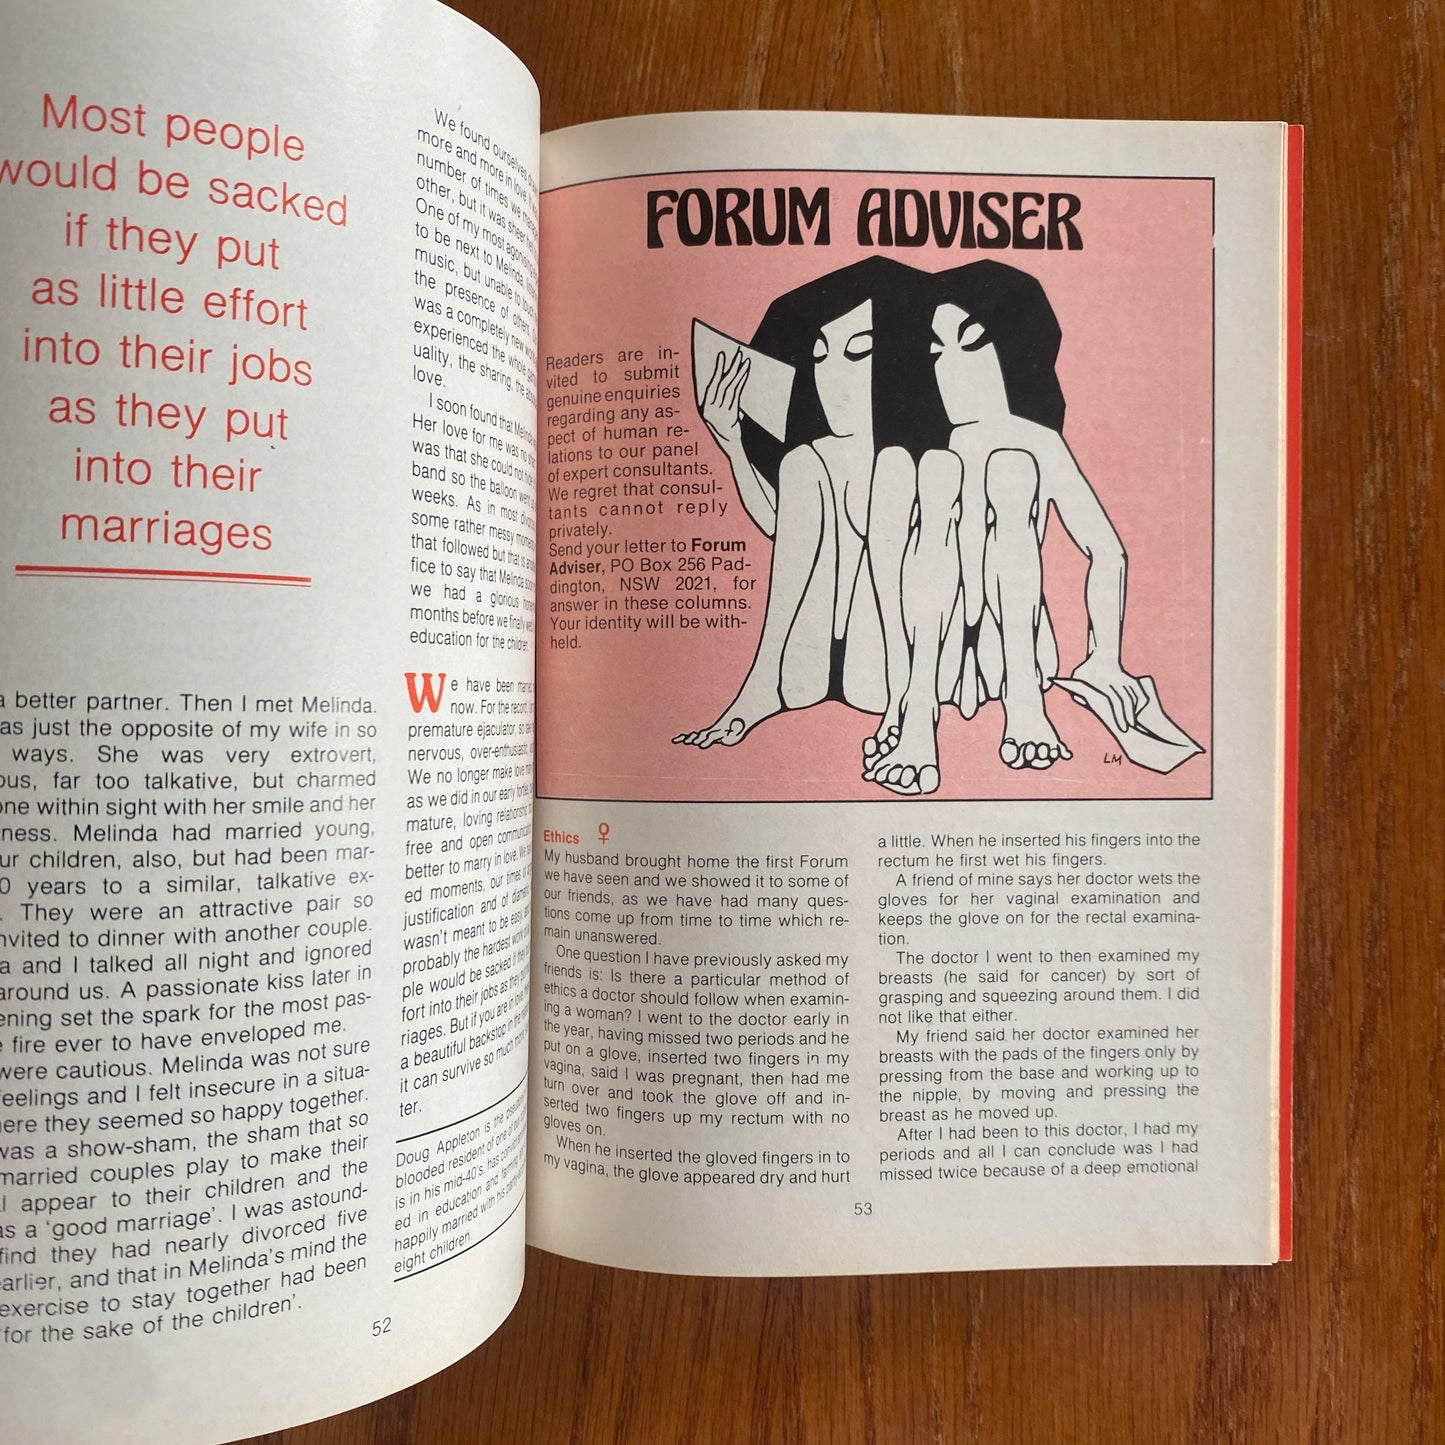 Forum: The Australian Journal of interpersonal Relations - V6#11 1978